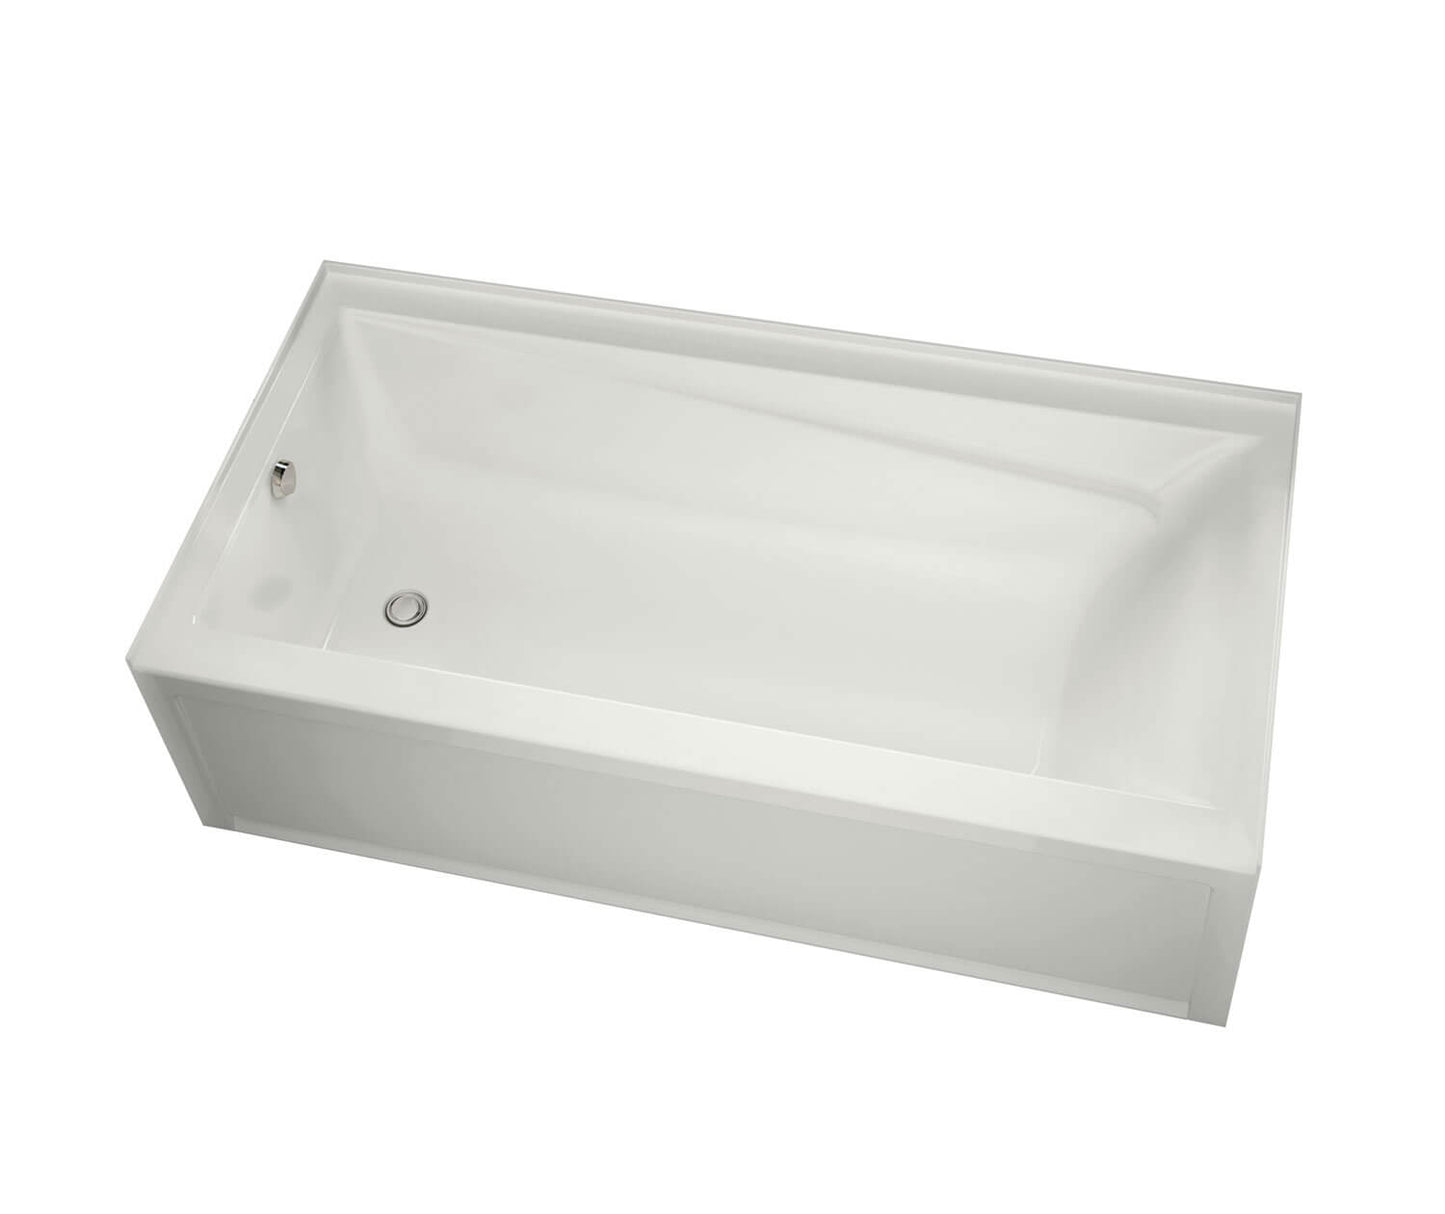 Maax Exhibit 7236 IFS 71 7/8" x 36" x 18" Acrylic Alcove Left Hand Drain Bathtub in White